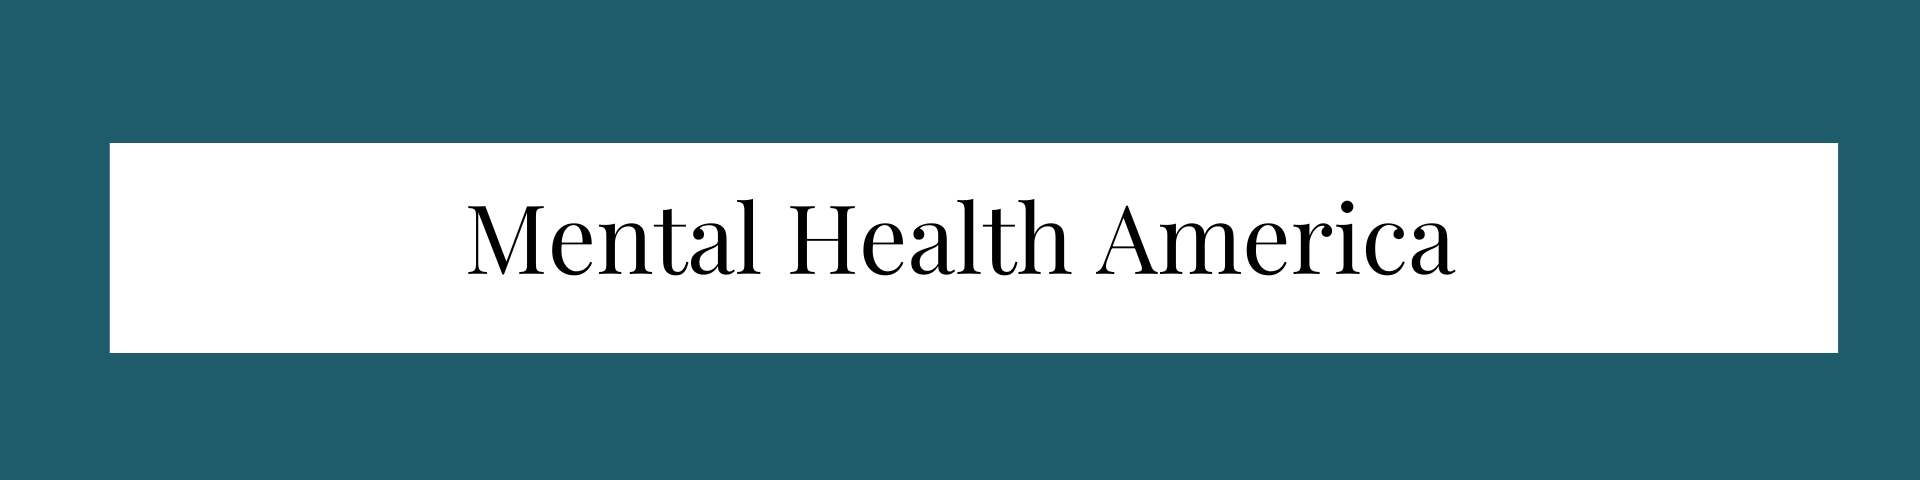 Mental Health America (Link)